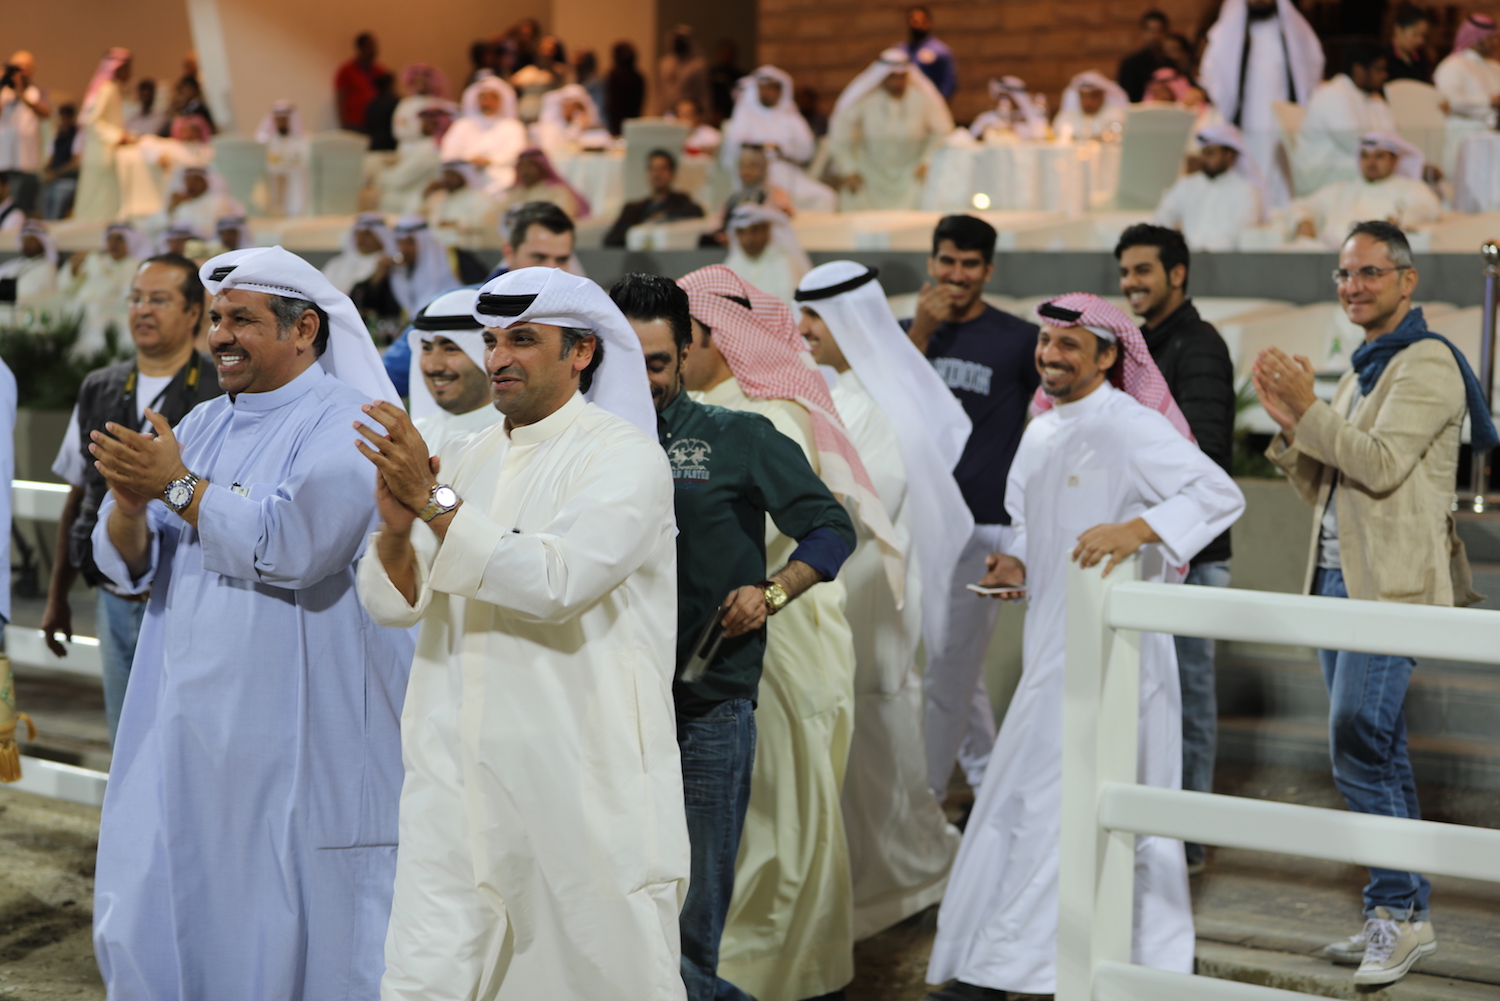 Kuwait Egyptian Event - enthusiastic fans - photo by Michael Steurs